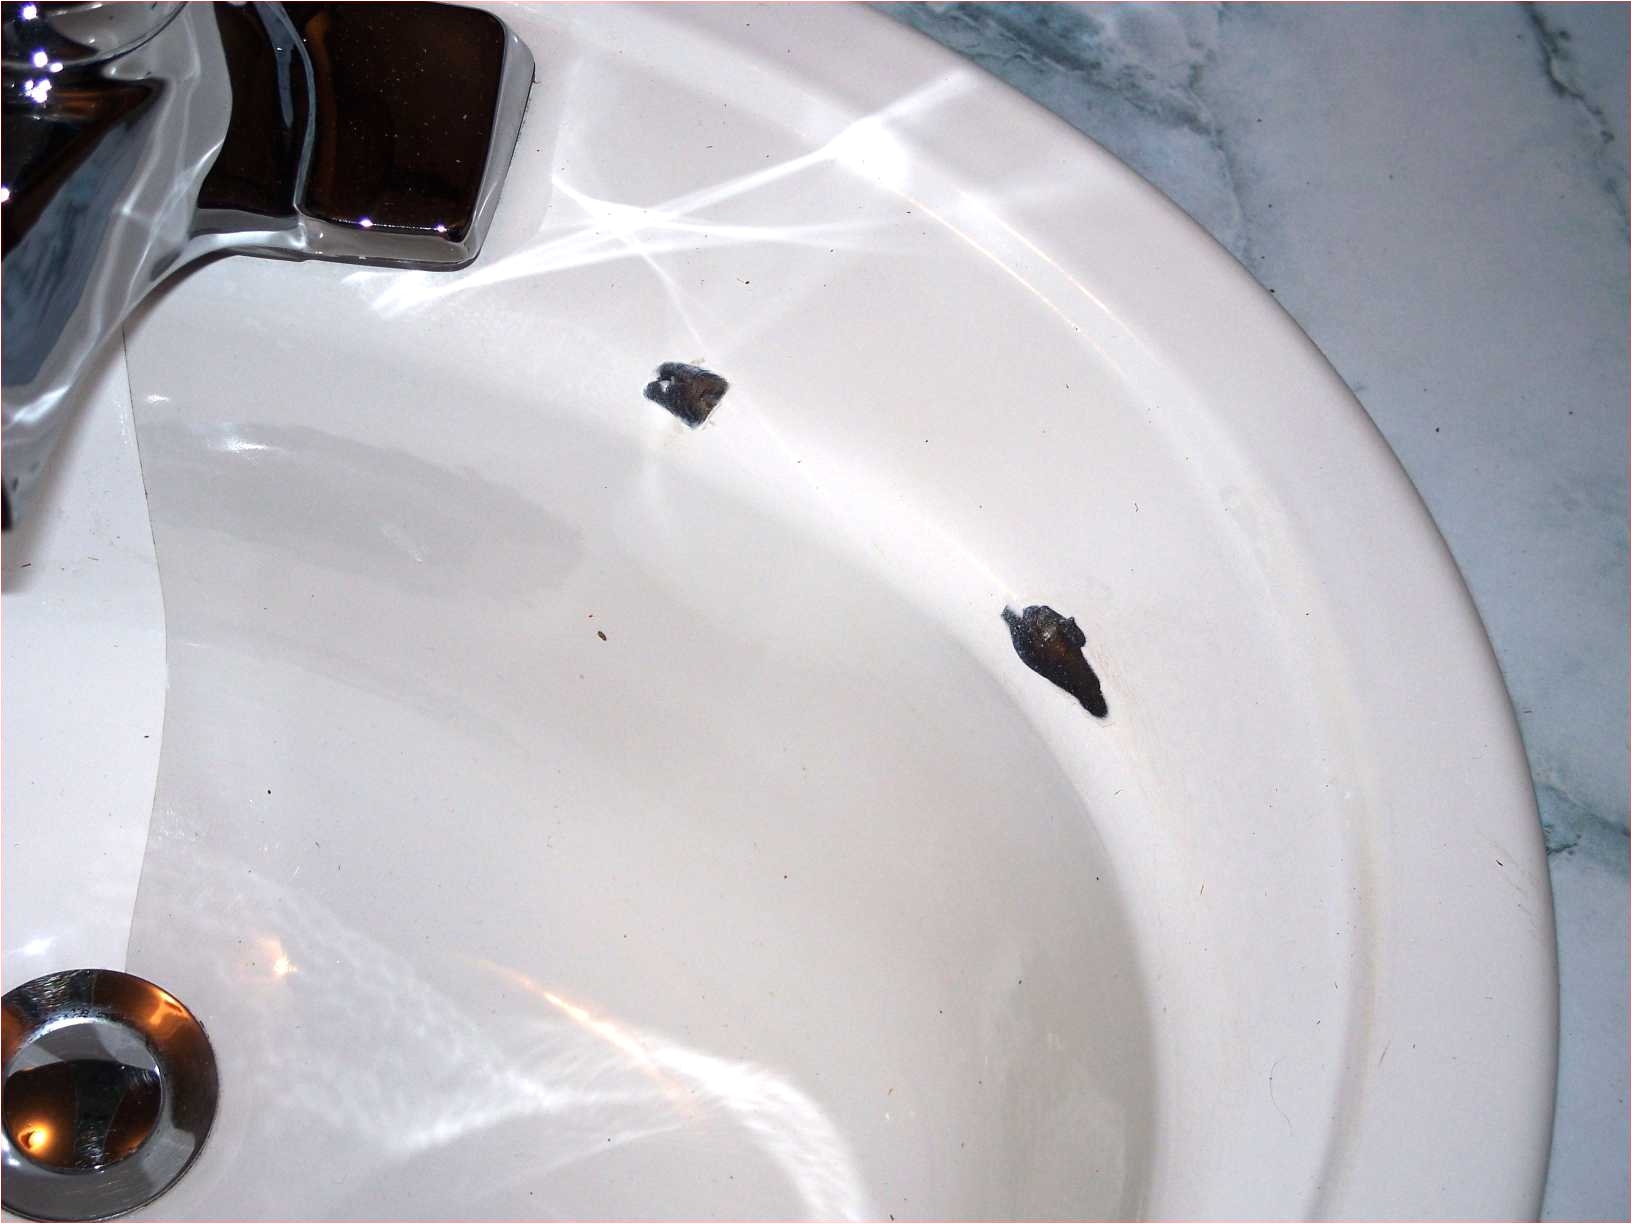 can you resurface a bathtub awesome tub repair luxury h sink enamel chip repair crack scratch repairi 0dcan you resurface a bathtub best tub repair luxury h